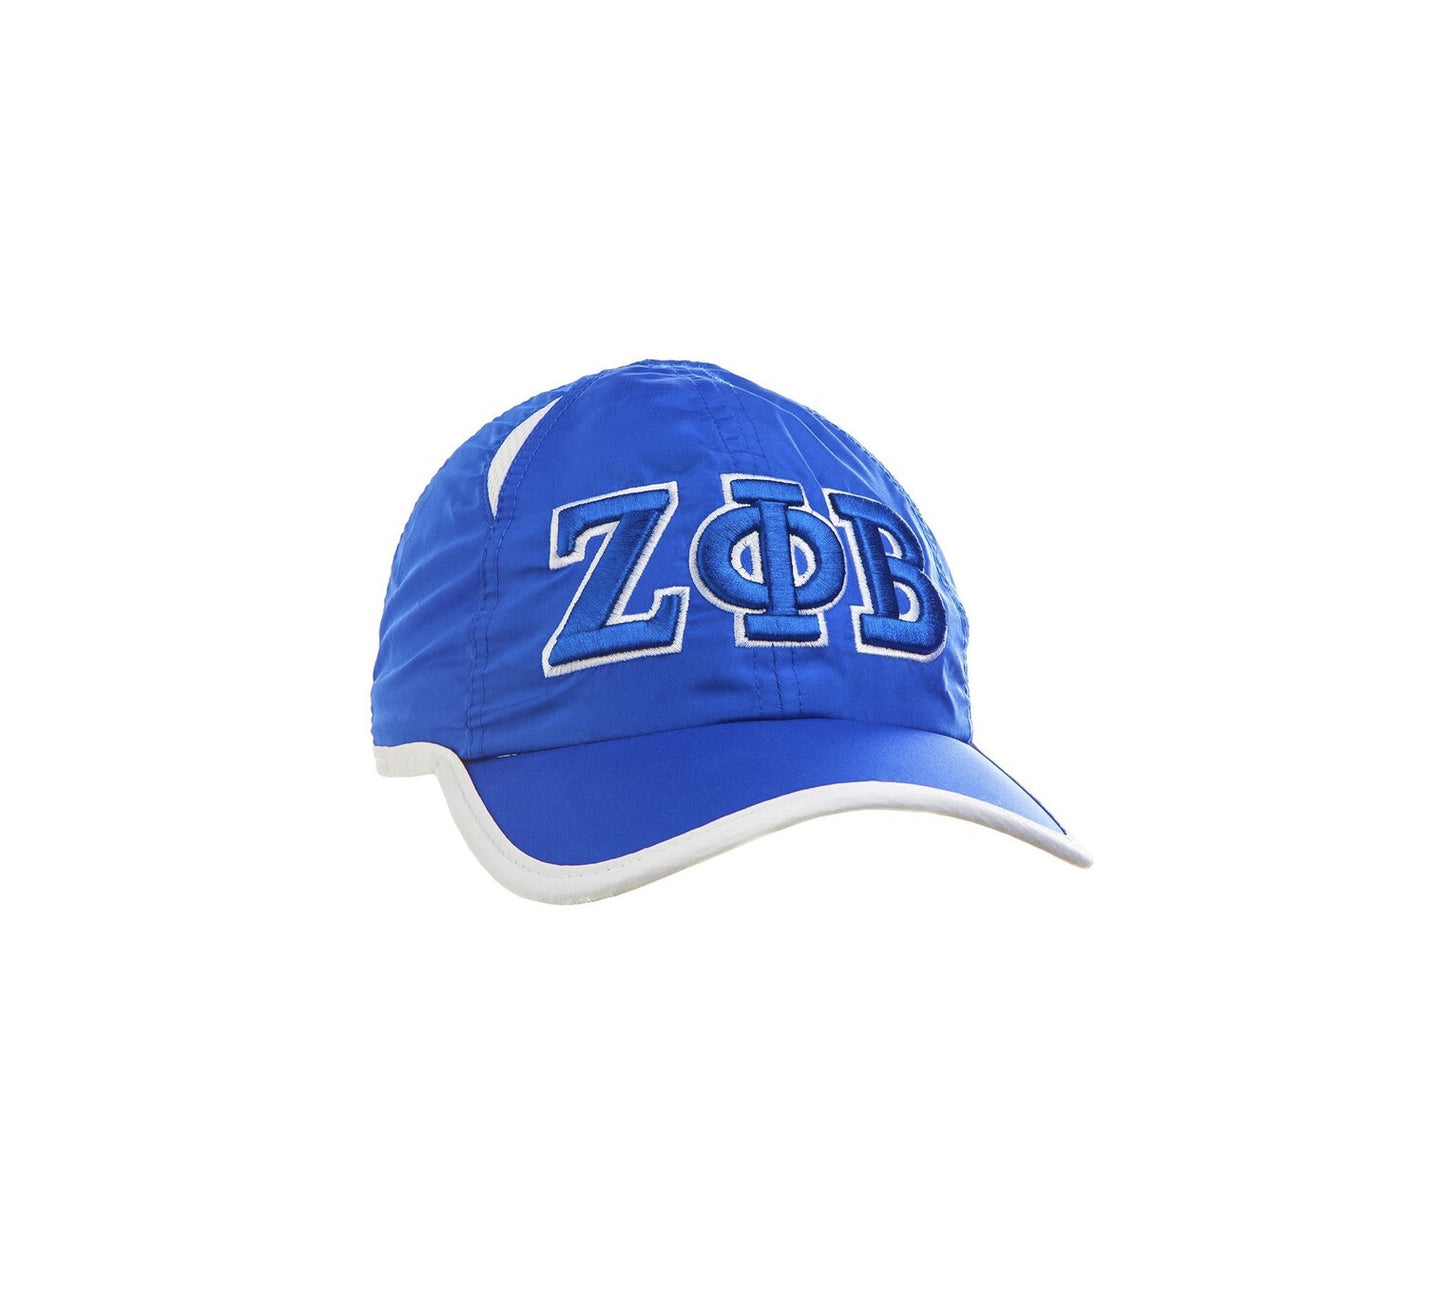 Zeta Hat - Feather Light Ball Cap